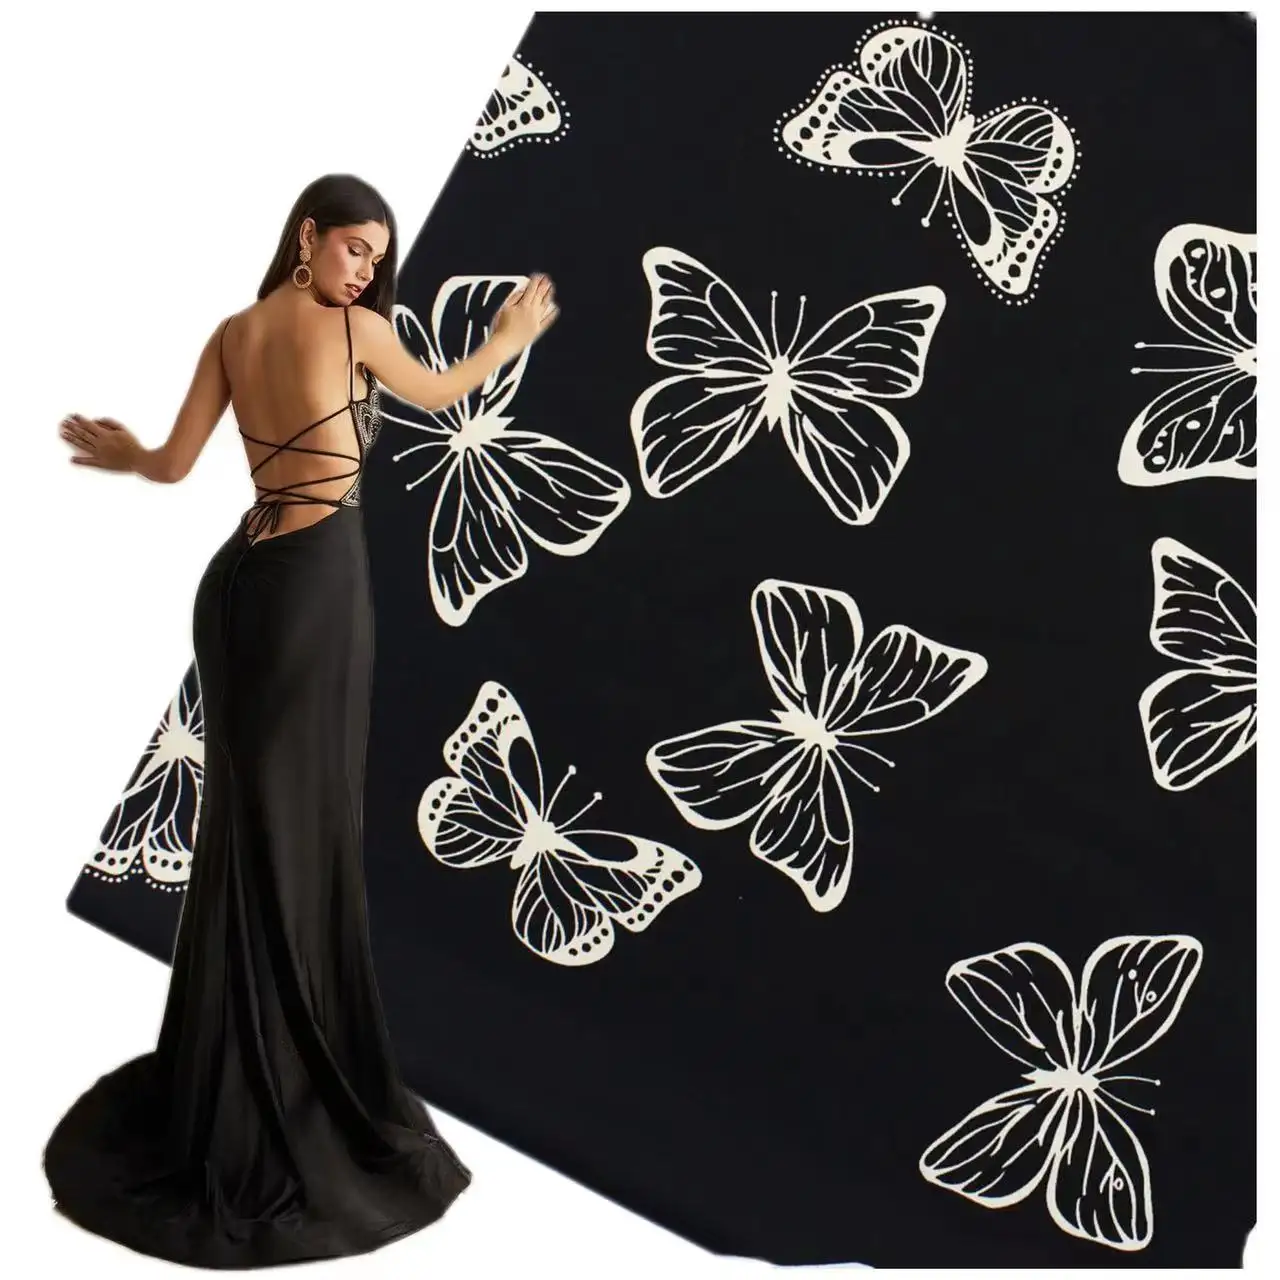 Gaun malam gaun elegan shinny pola kupu-kupu digital dicetak lembut kulit satin sutra kain untuk gaun panjang